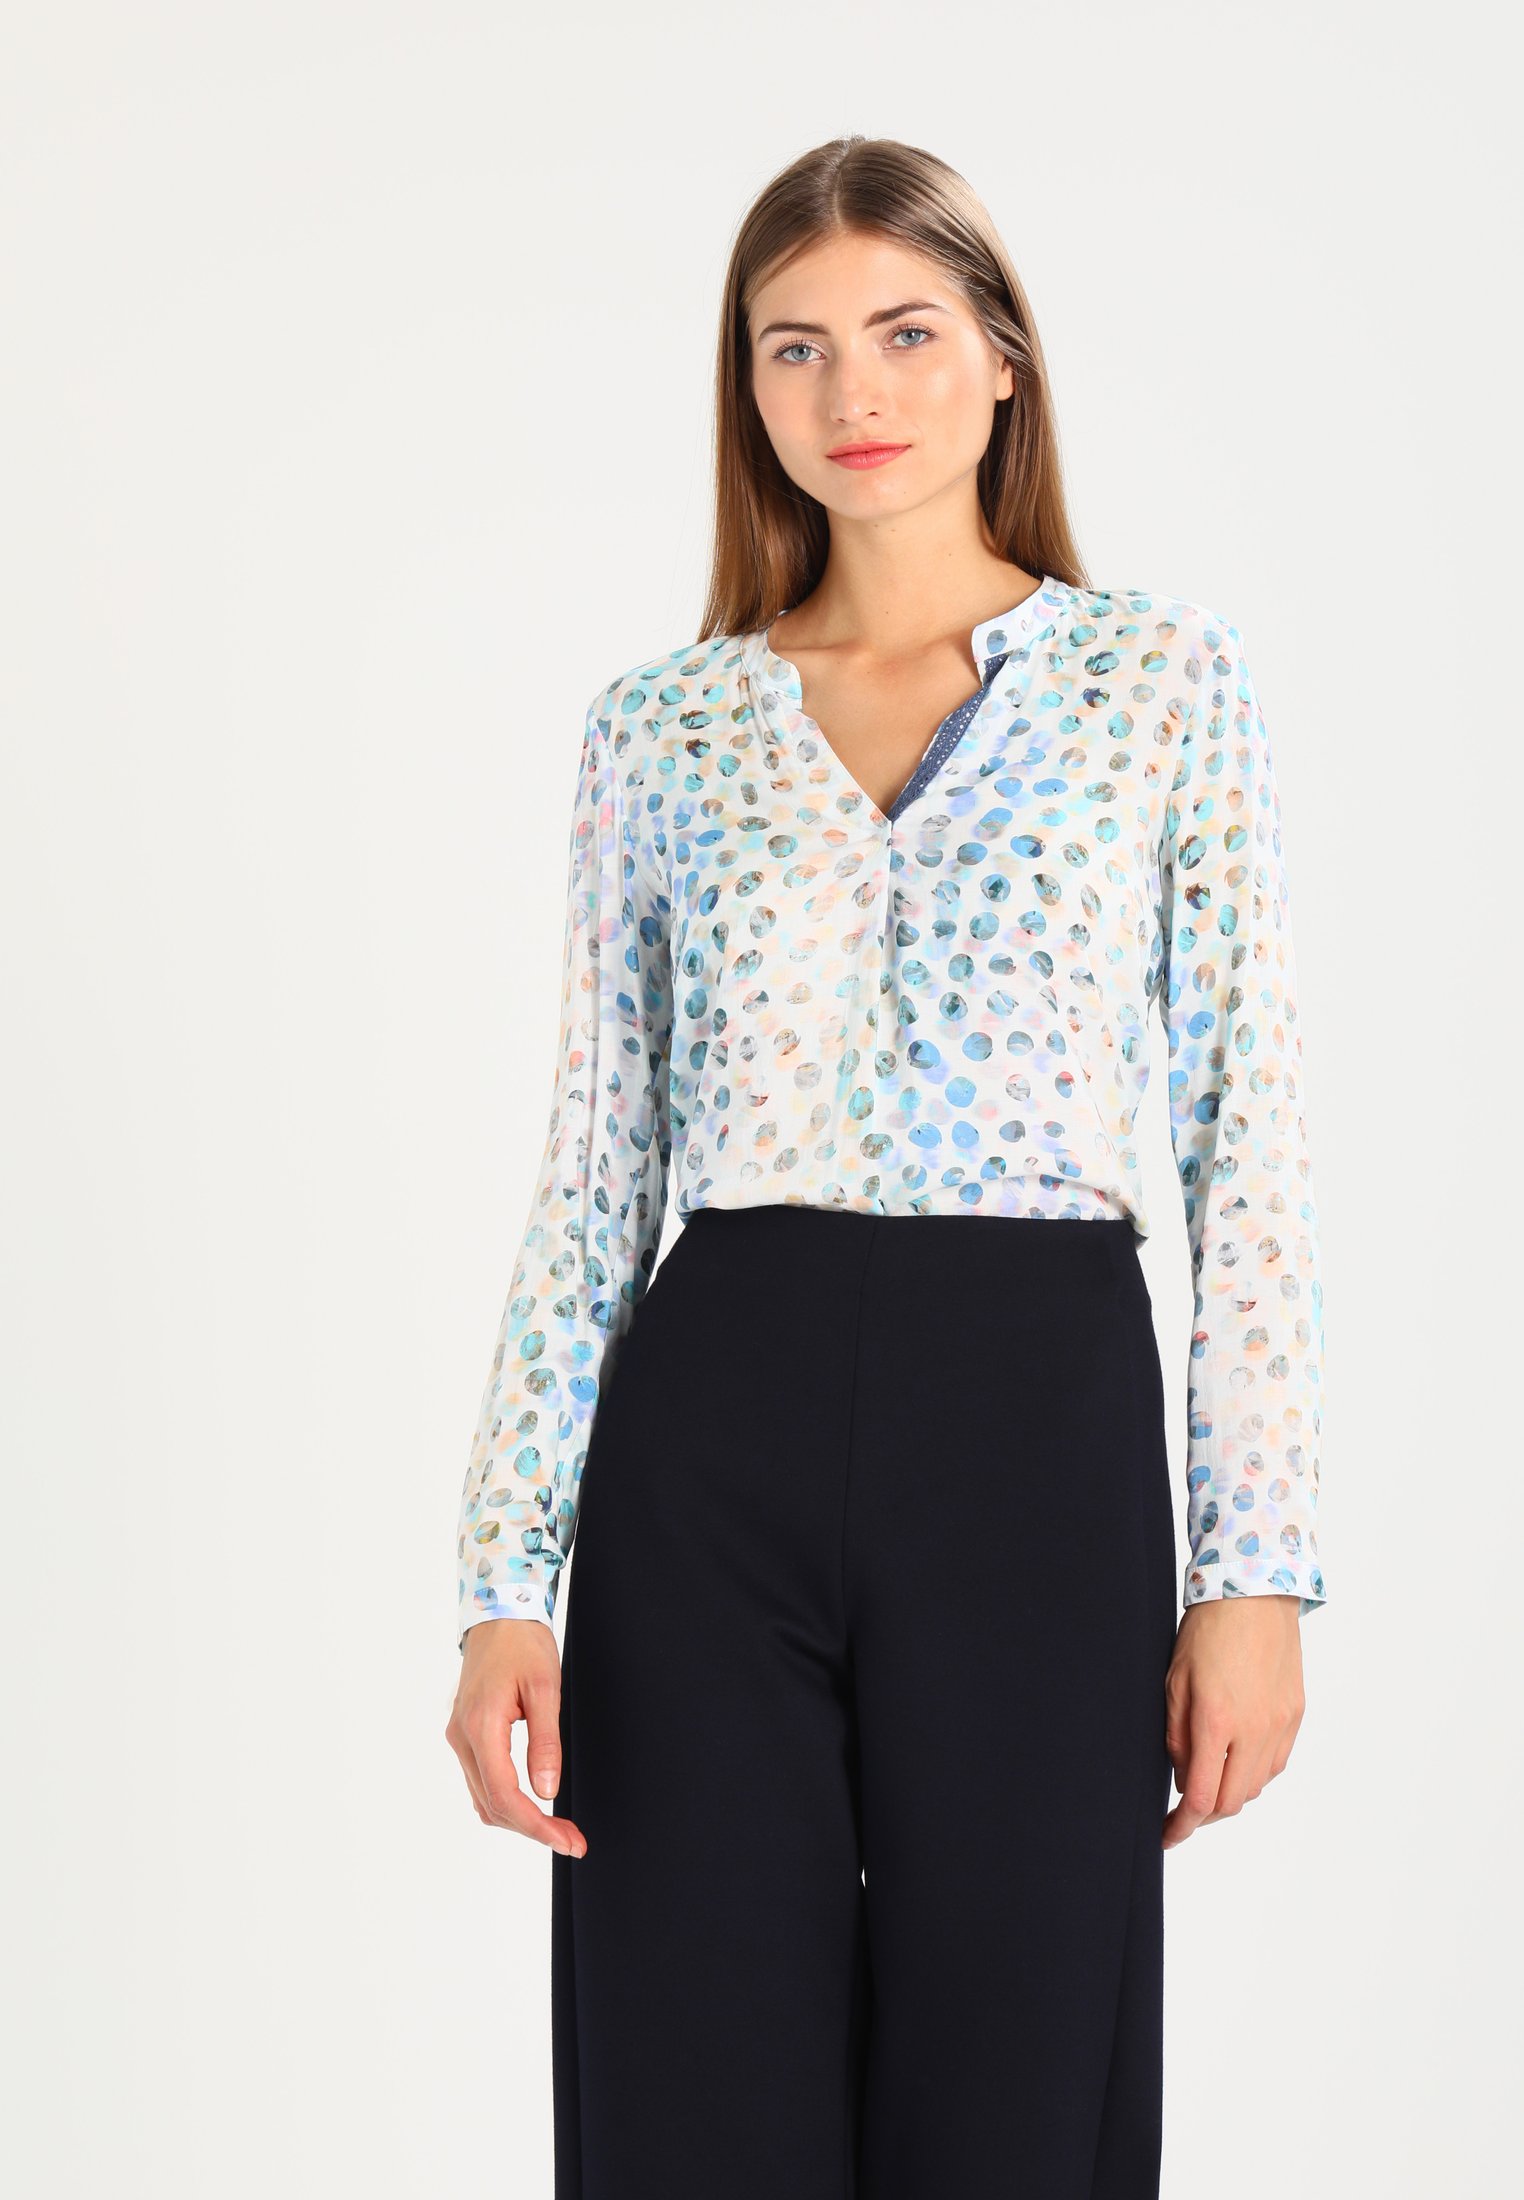 Emily van den Bergh Clothes emily van den bergh blouse weiss women clothing amazing selection usa TZFWGHJ